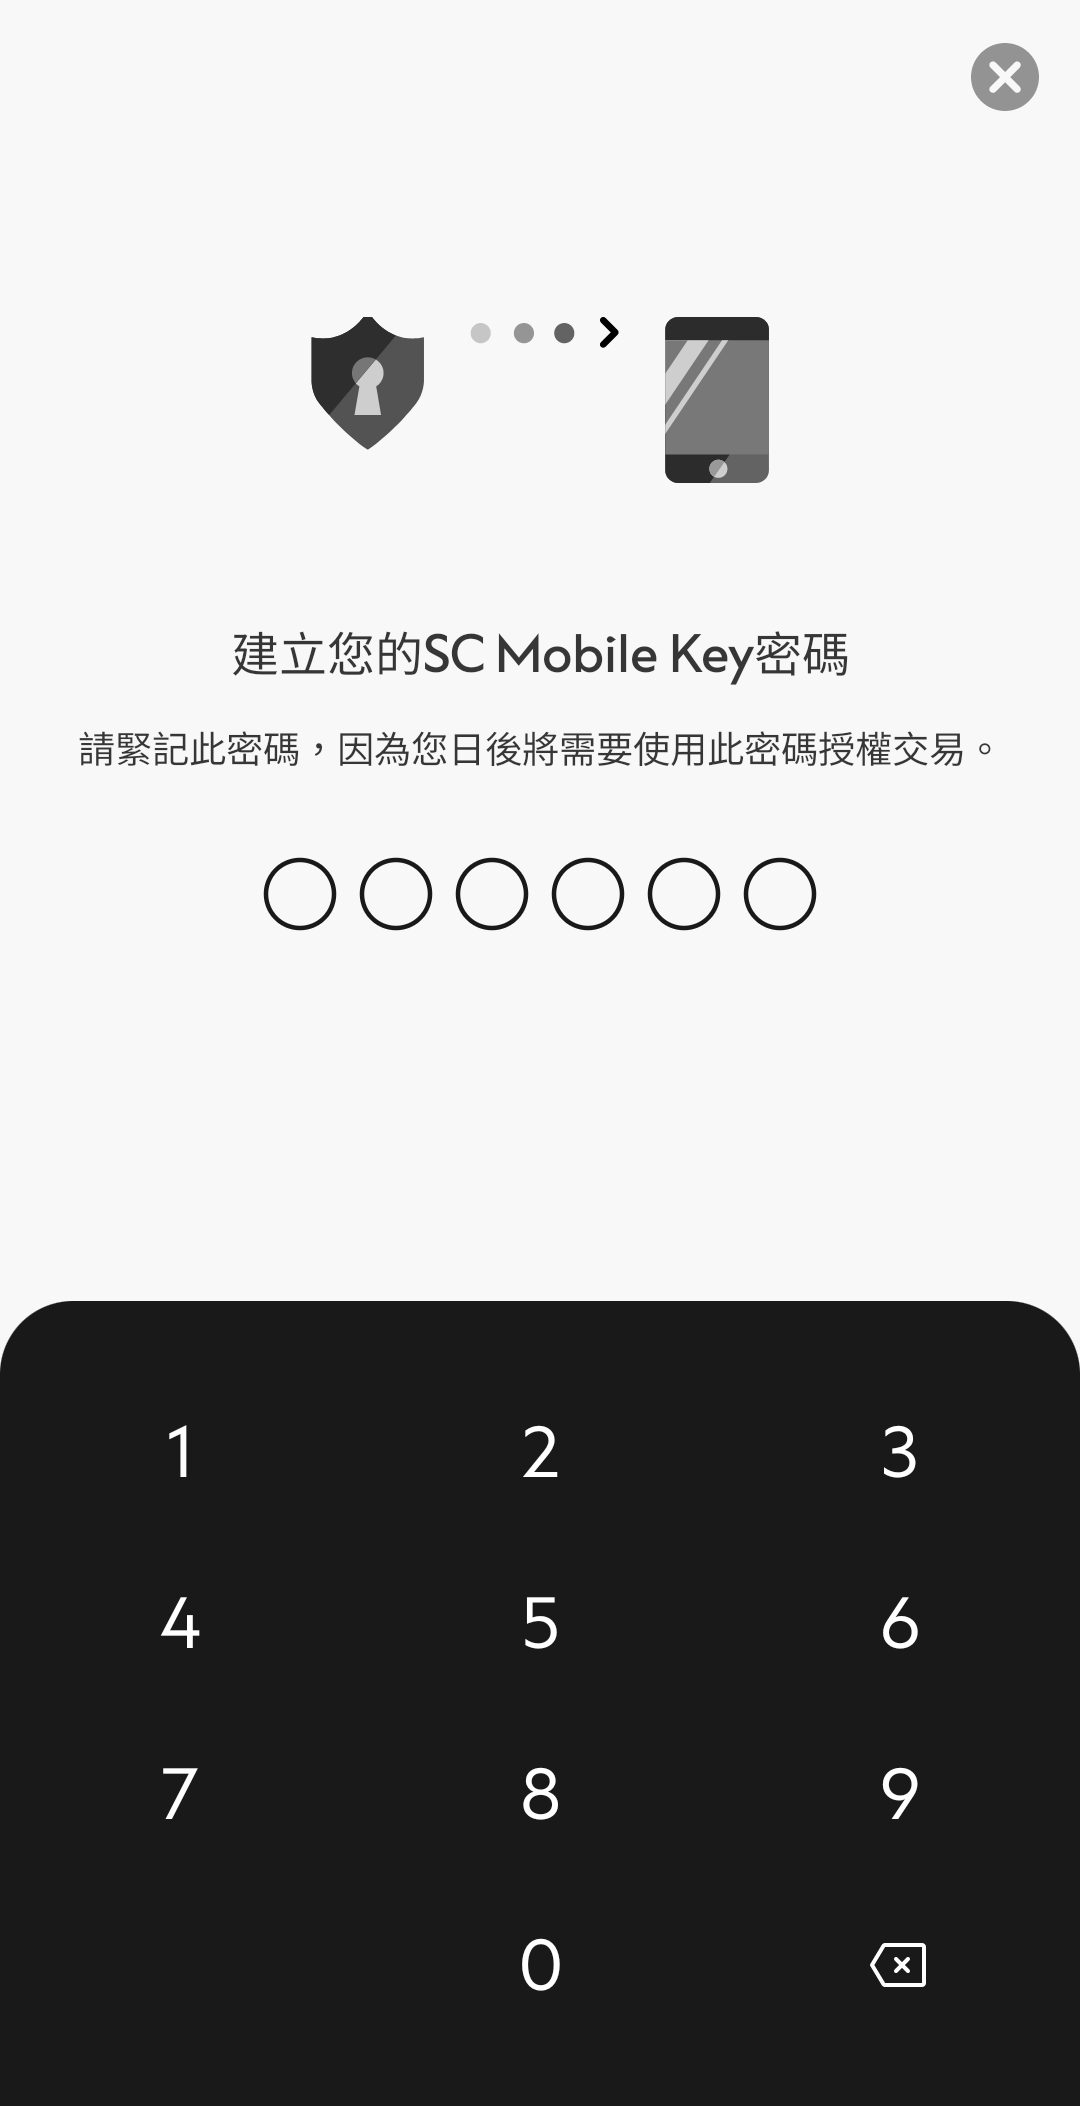 登記您的SC Mobile Key步驟4